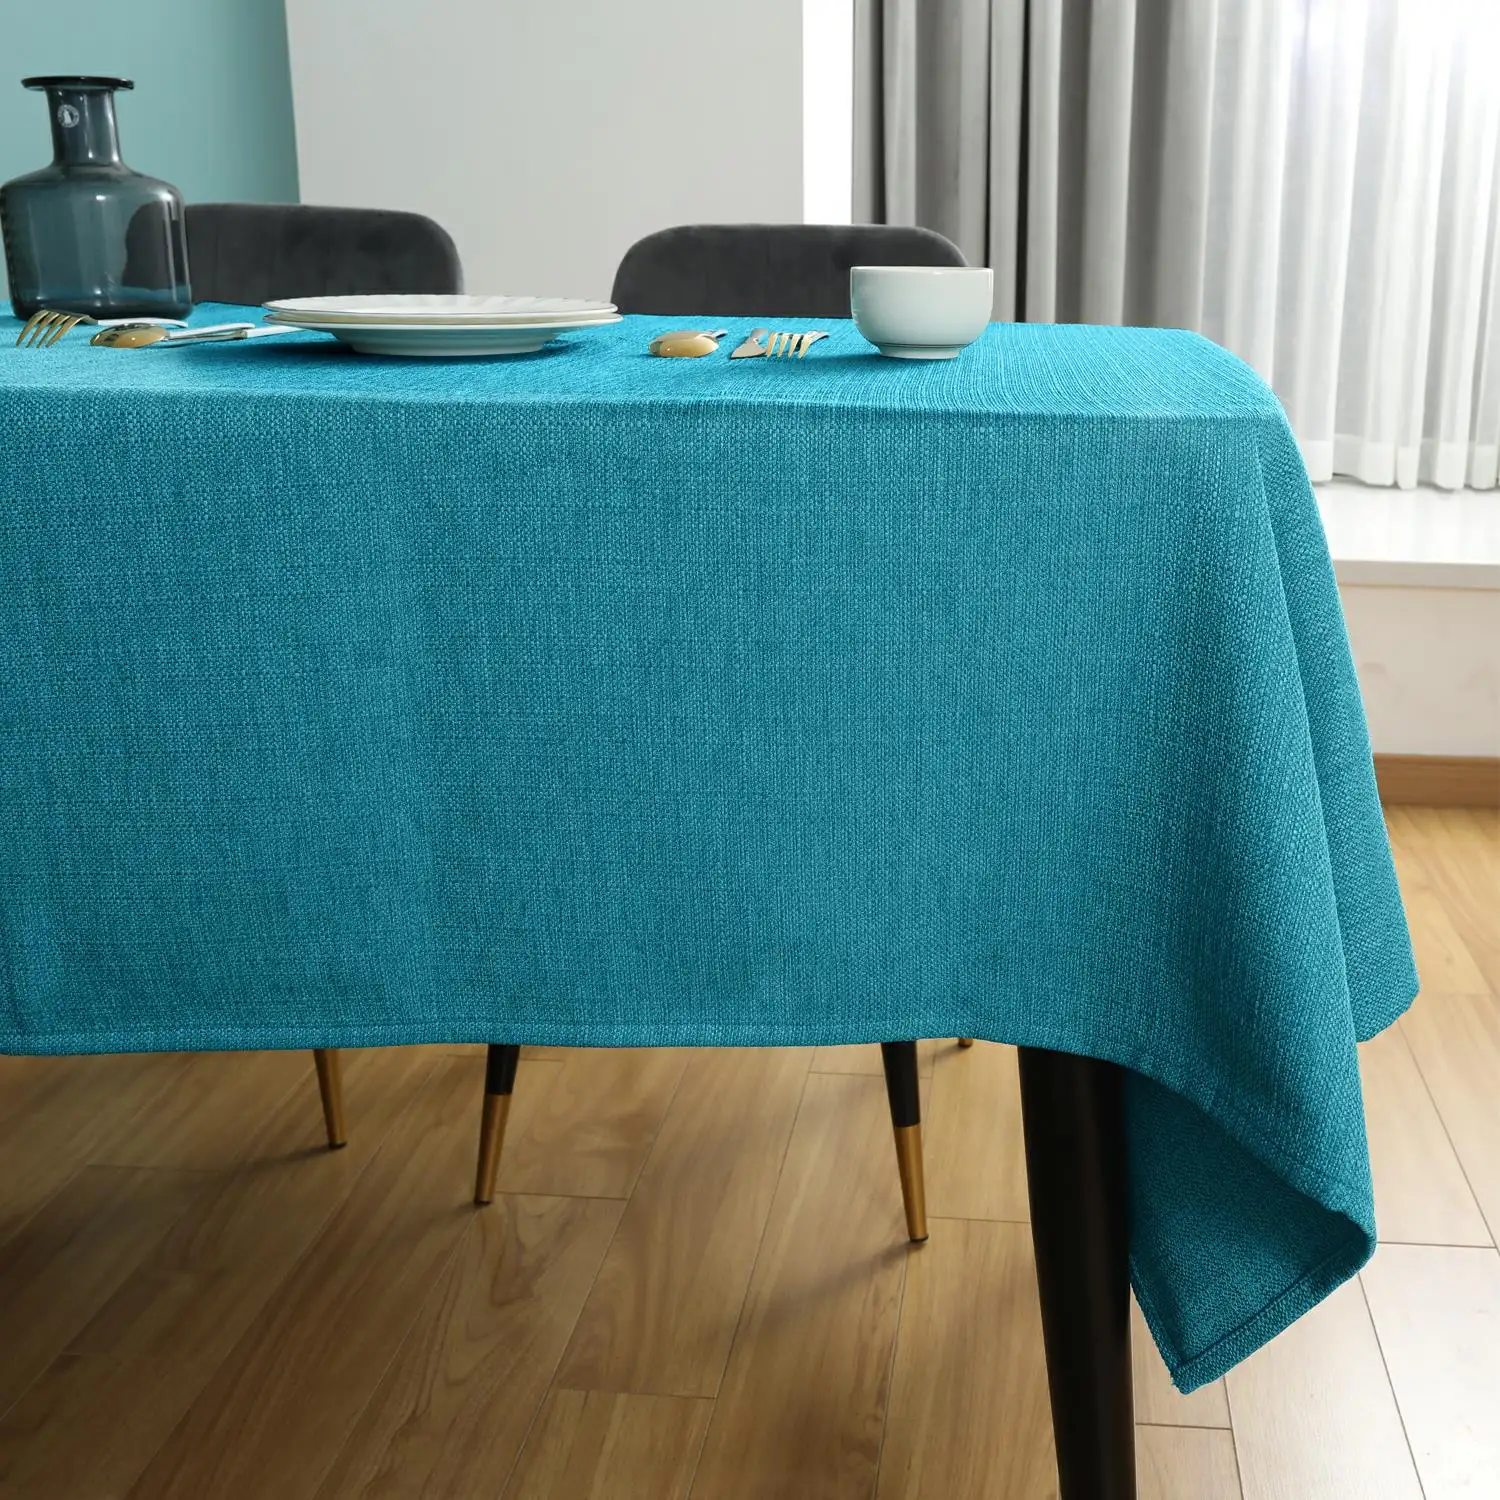 Factory Banquet Table Cloth (11 Colors) Blue Water Resistant Solid Color Faux Linen Restaurant Advertisement Tablecloth